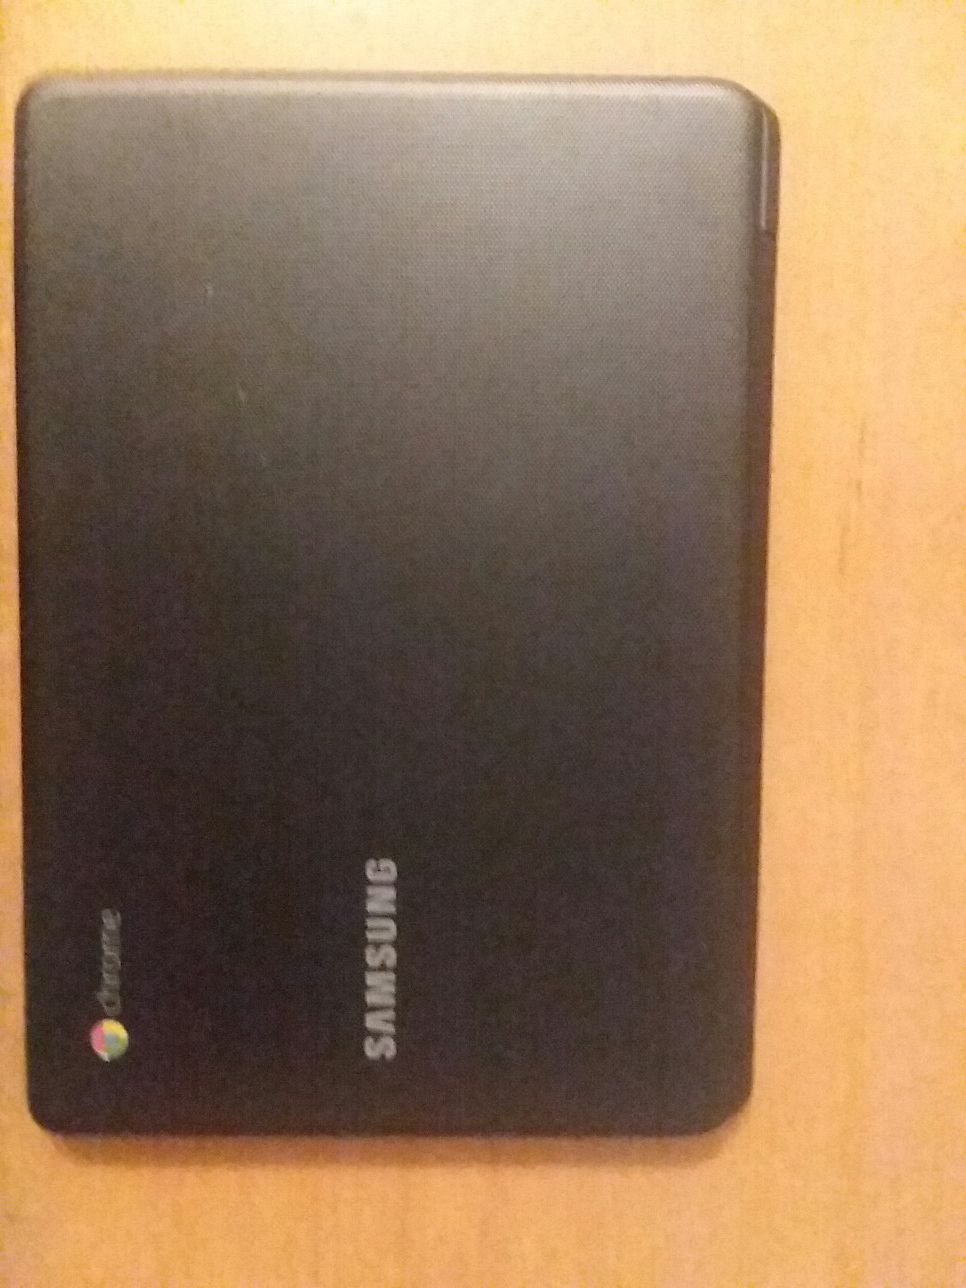 Samsung cromebook 3